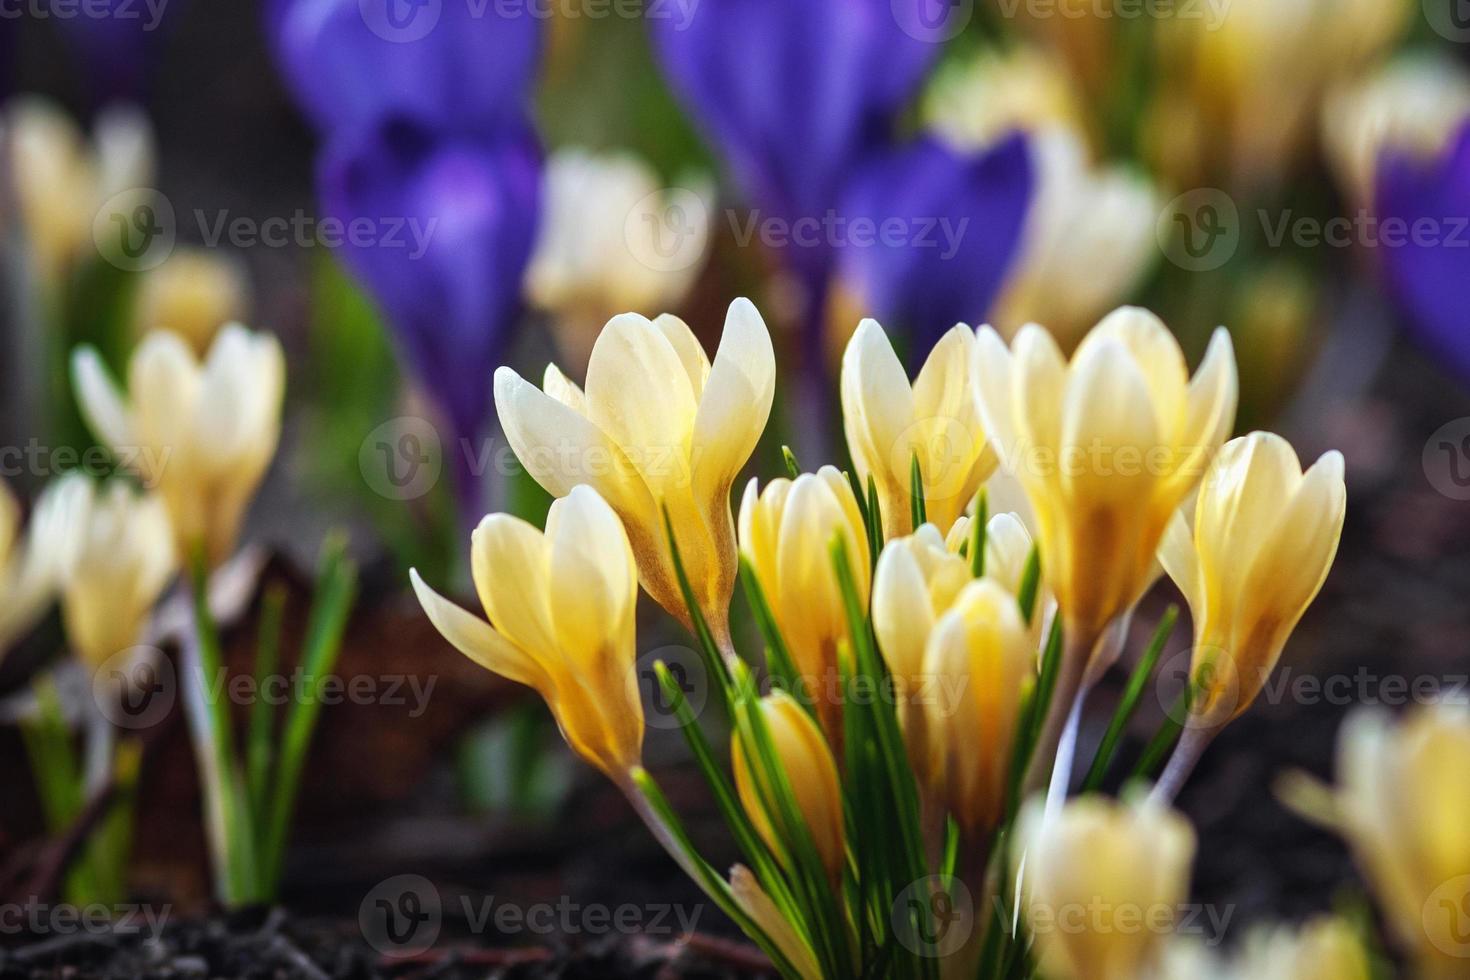 dorado azafrán, azafrán crisanto - amarillo y azul azafrán flores floreciente en temprano primavera foto